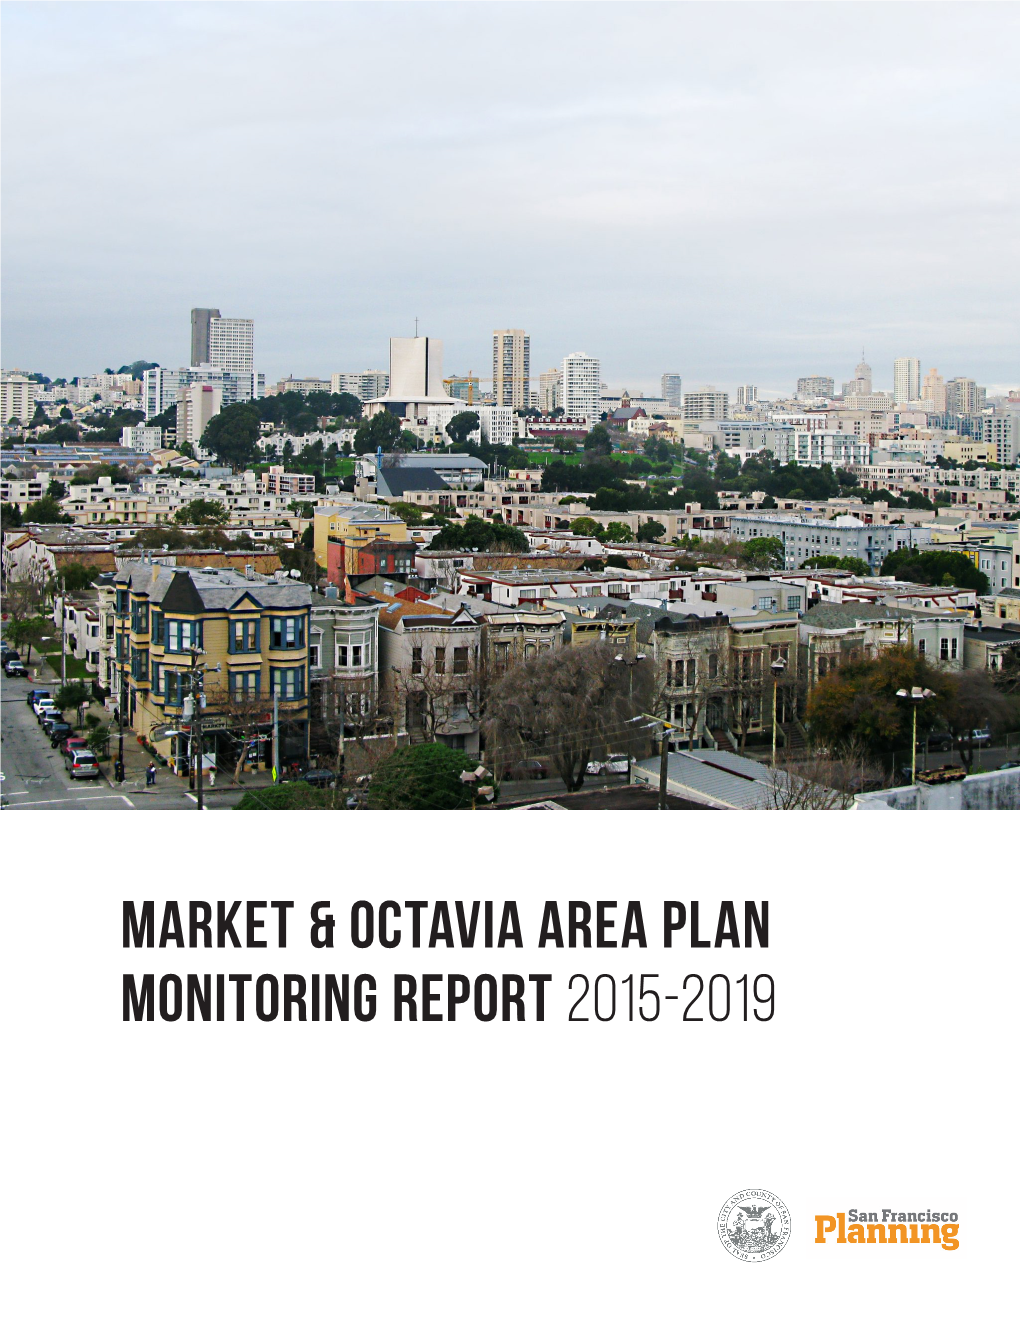 Market & Octavia Area Plan Monitoring Report 2015-2019